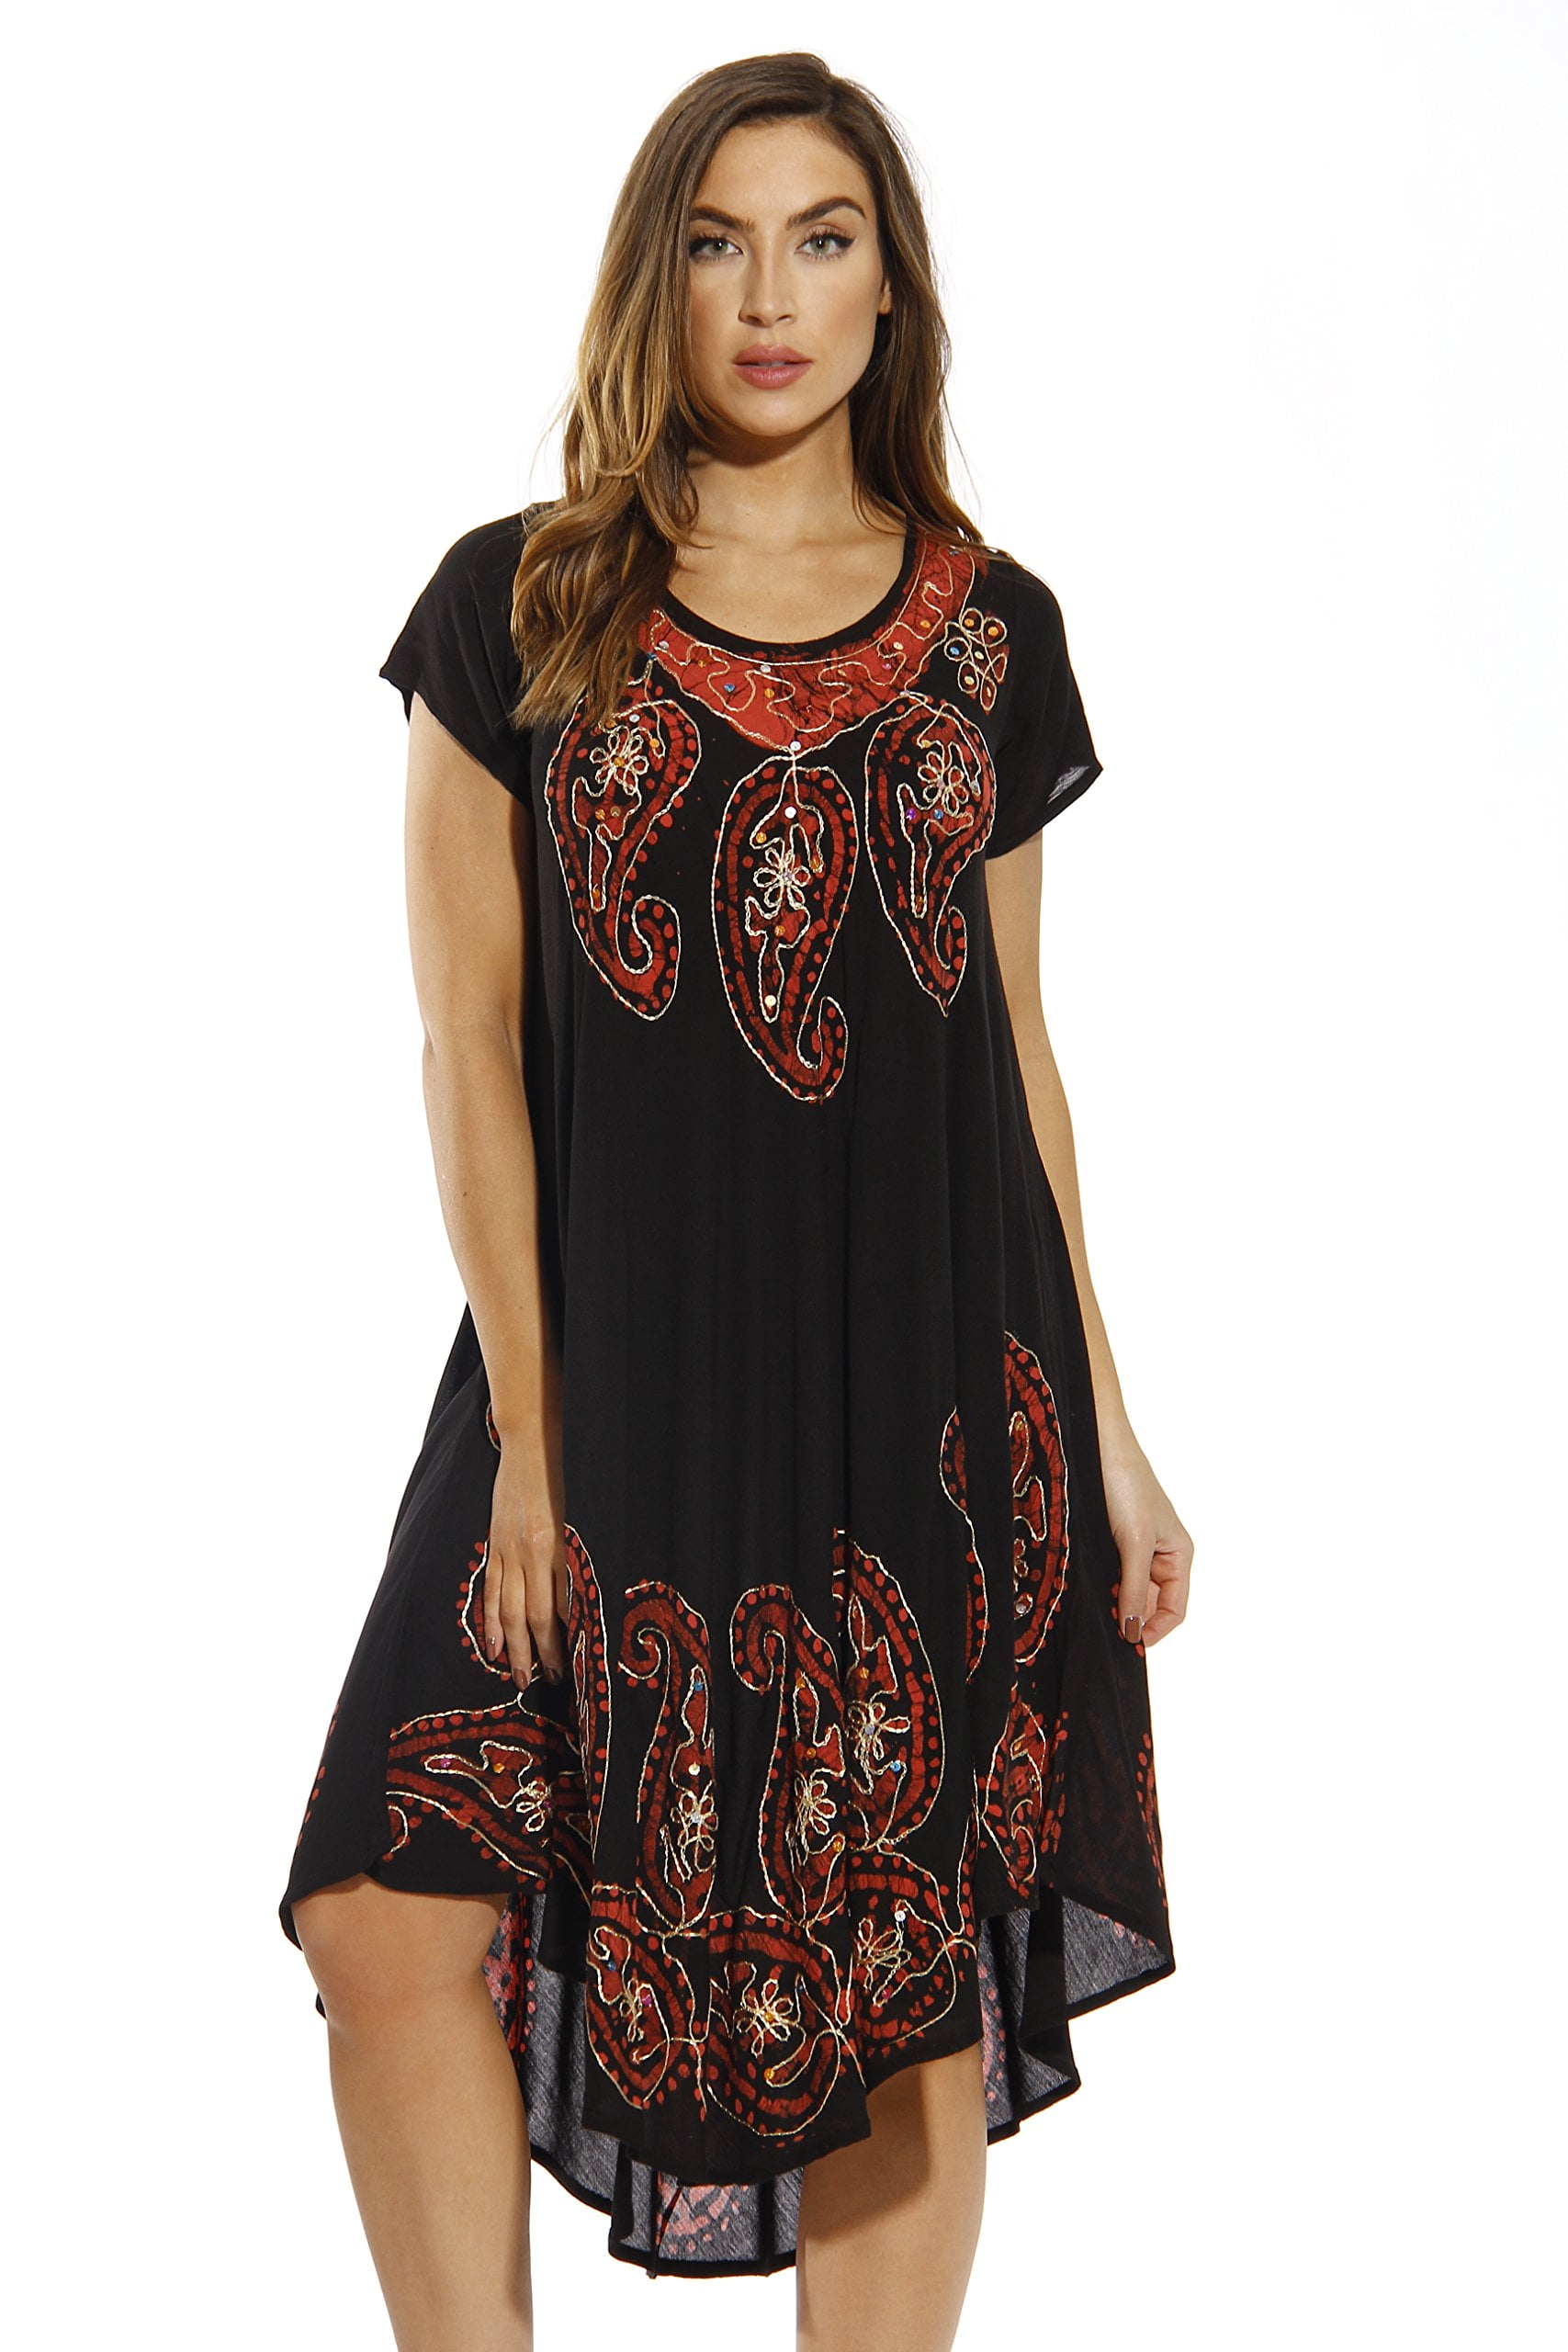 Riviera Sun Dress / Dresses for Women (Black / Red, 1X) - Walmart.com